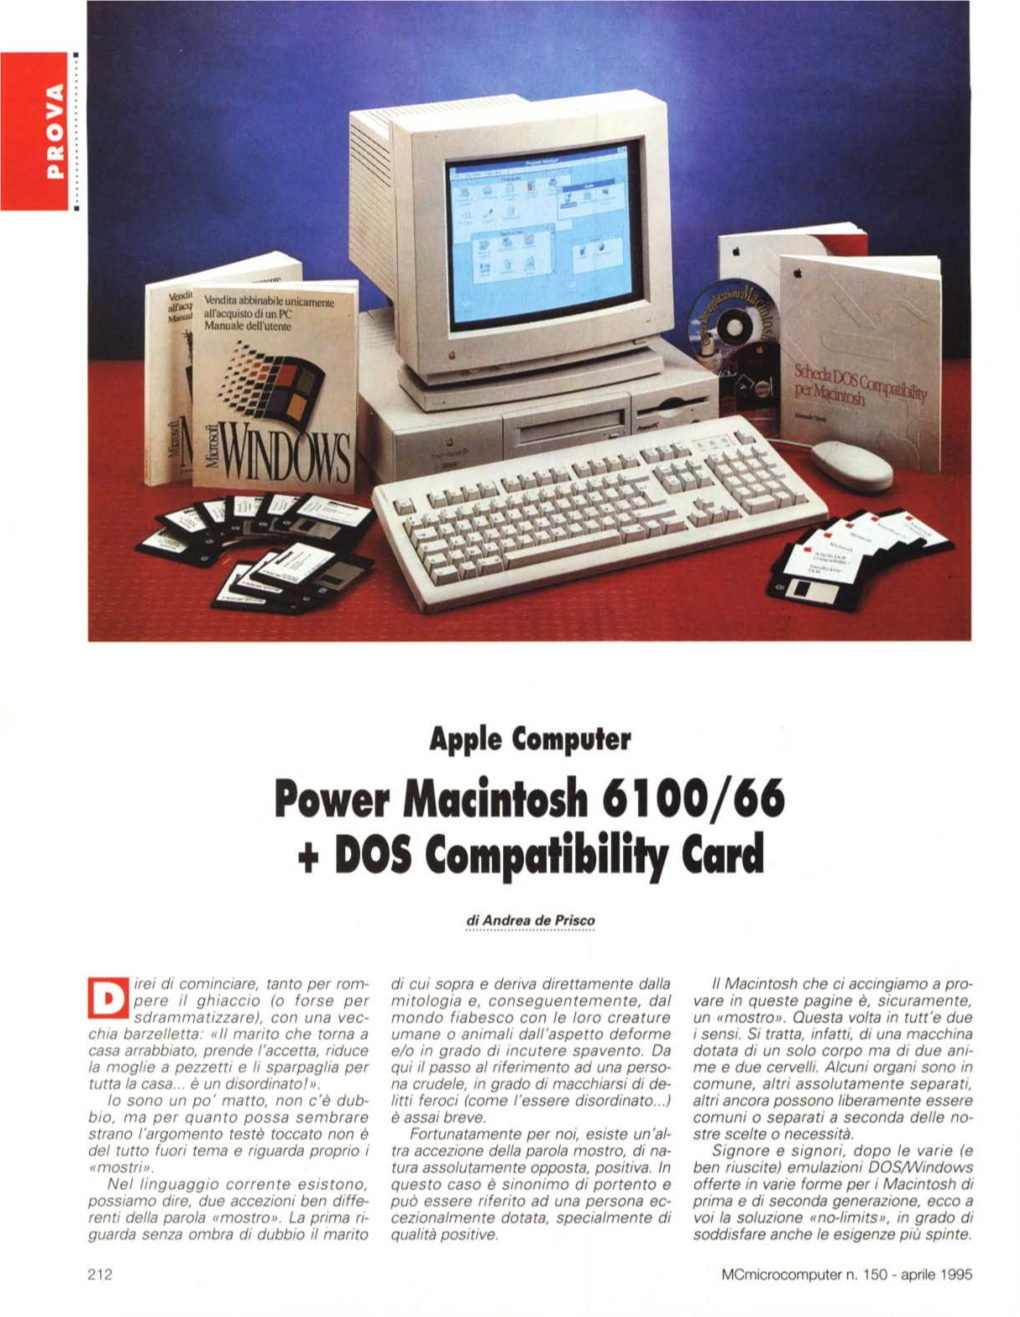 Power Macinlosh 61 00/66 + Doscompatibility Card